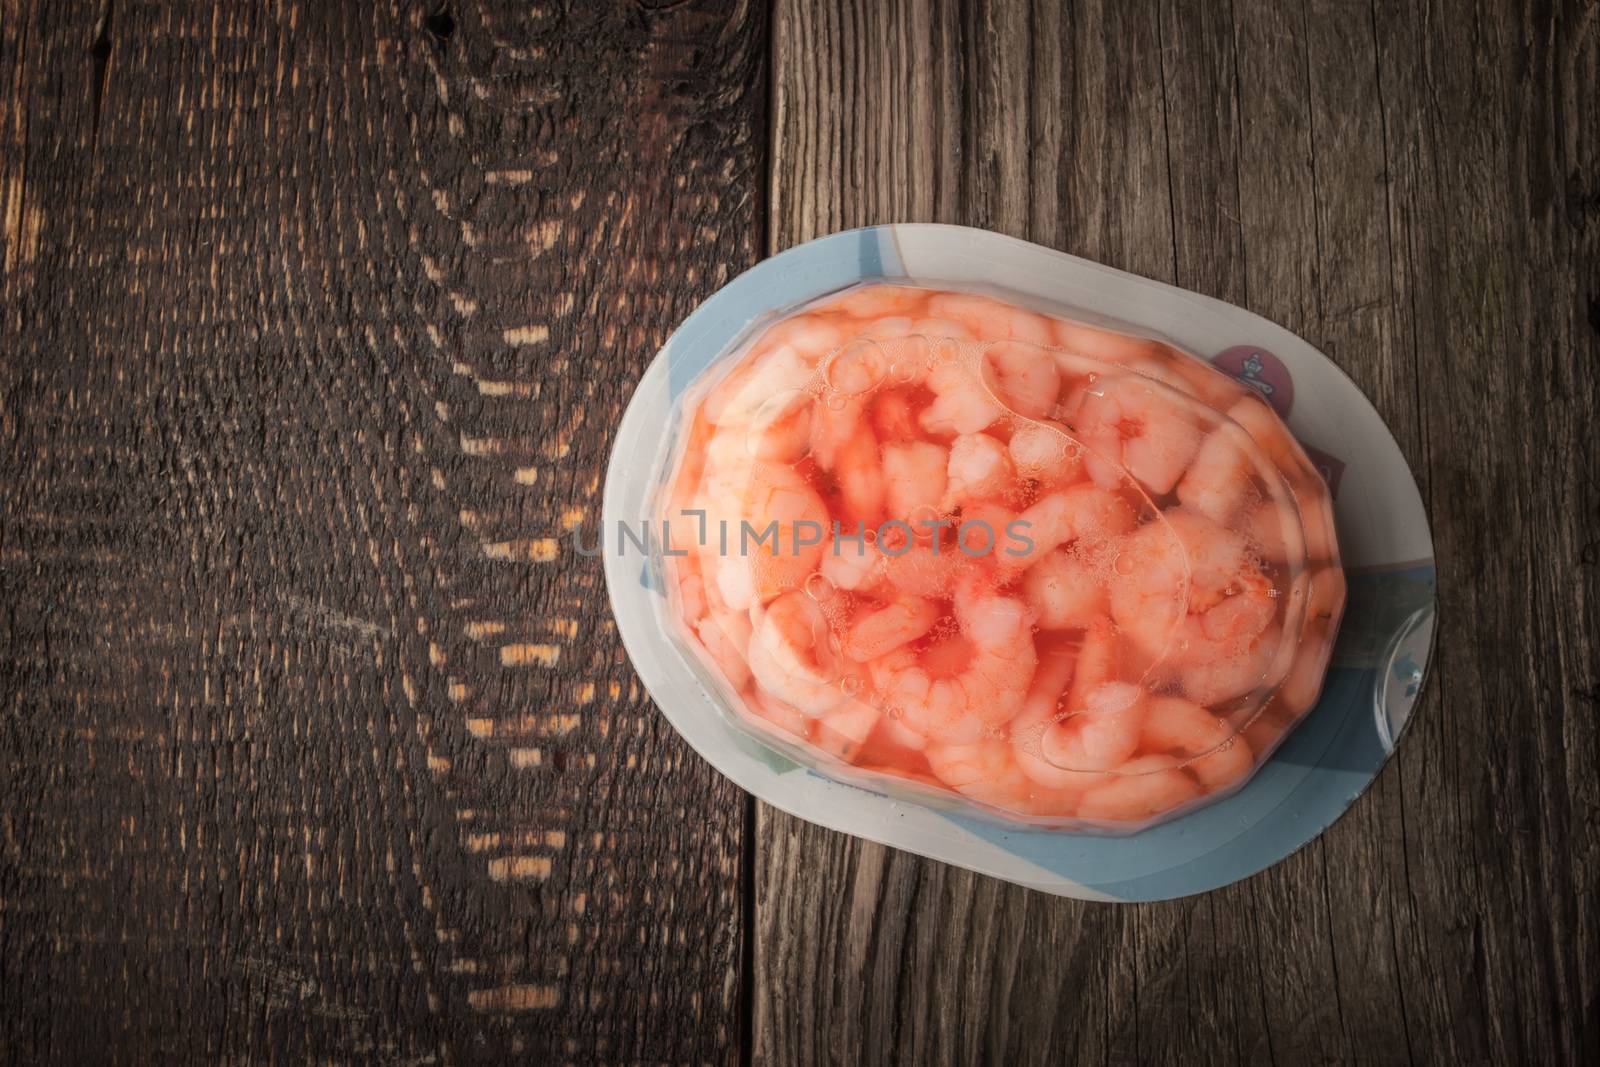 Shrimps in a package by Deniskarpenkov